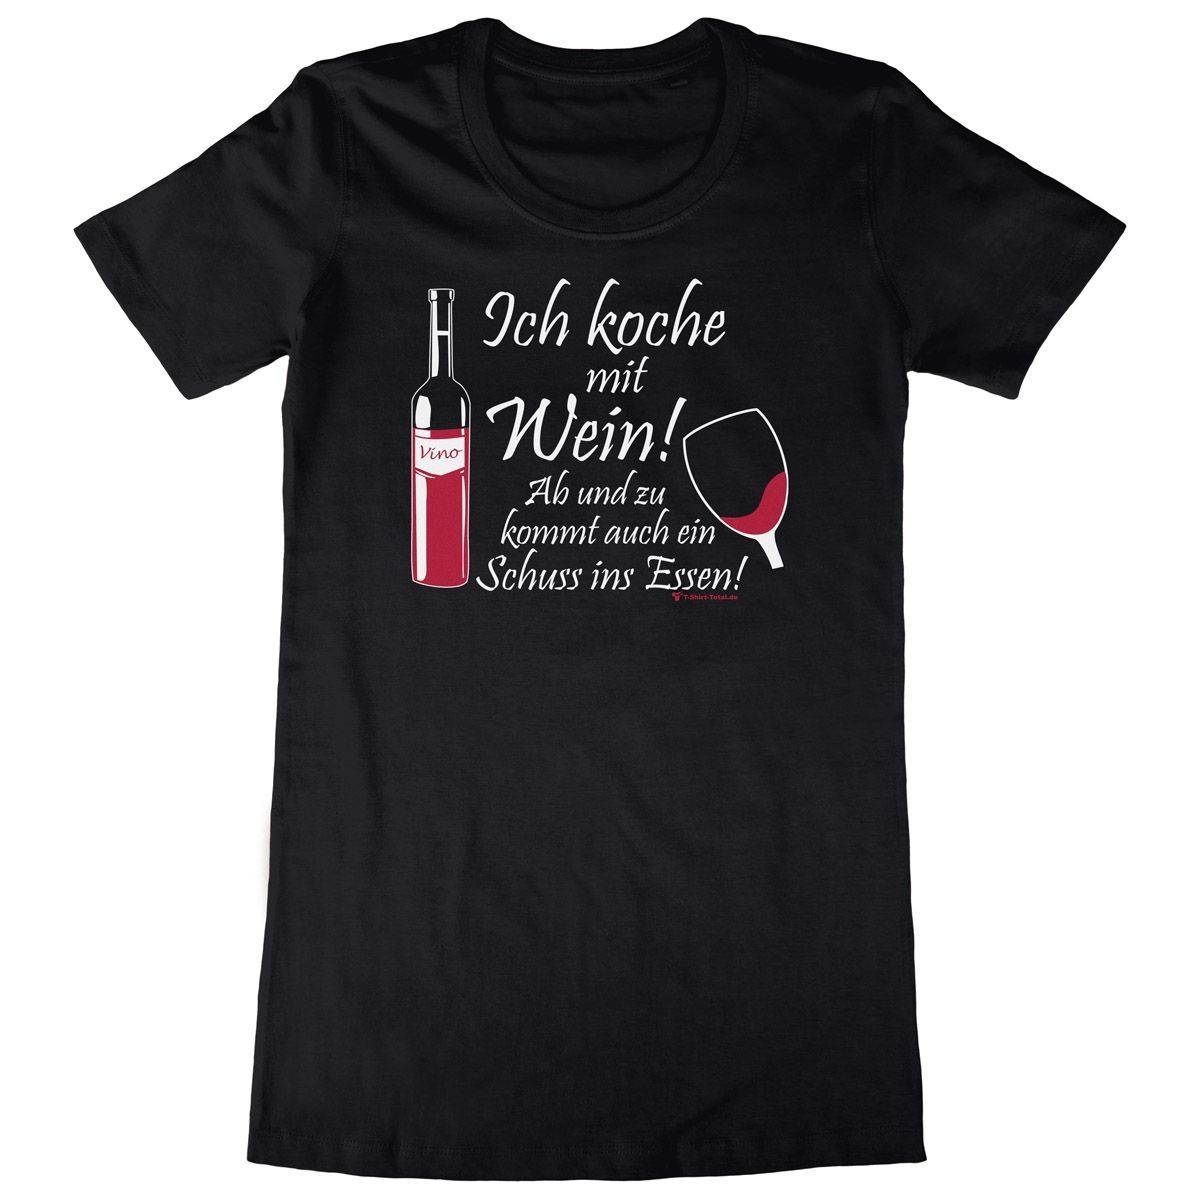 Koche mit Wein Woman Long Shirt schwarz Small